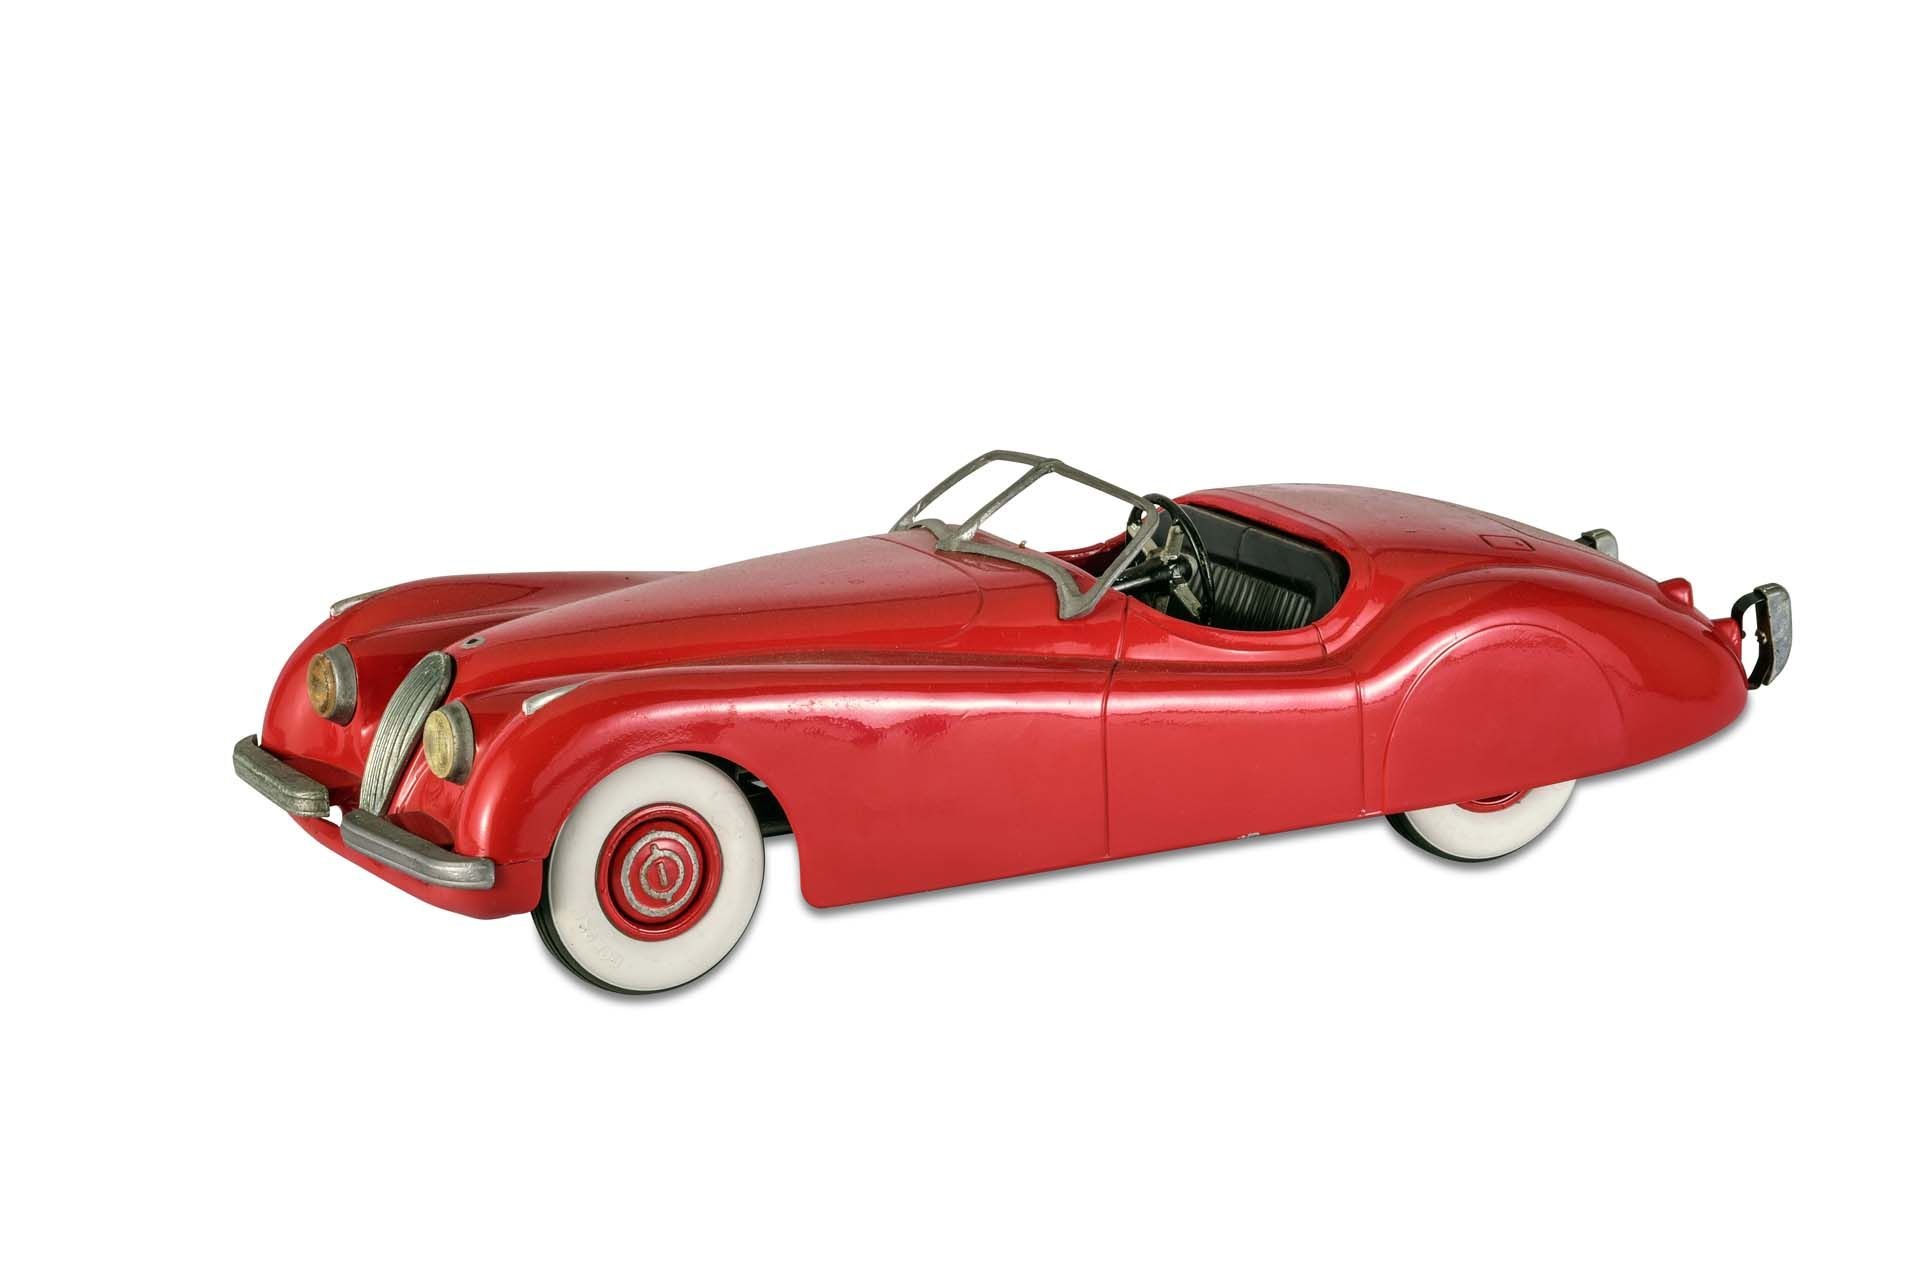 For Sale Doepke Toys 'Jaguar XK120 1950s' 17-inch toy car, Fire Engine Red